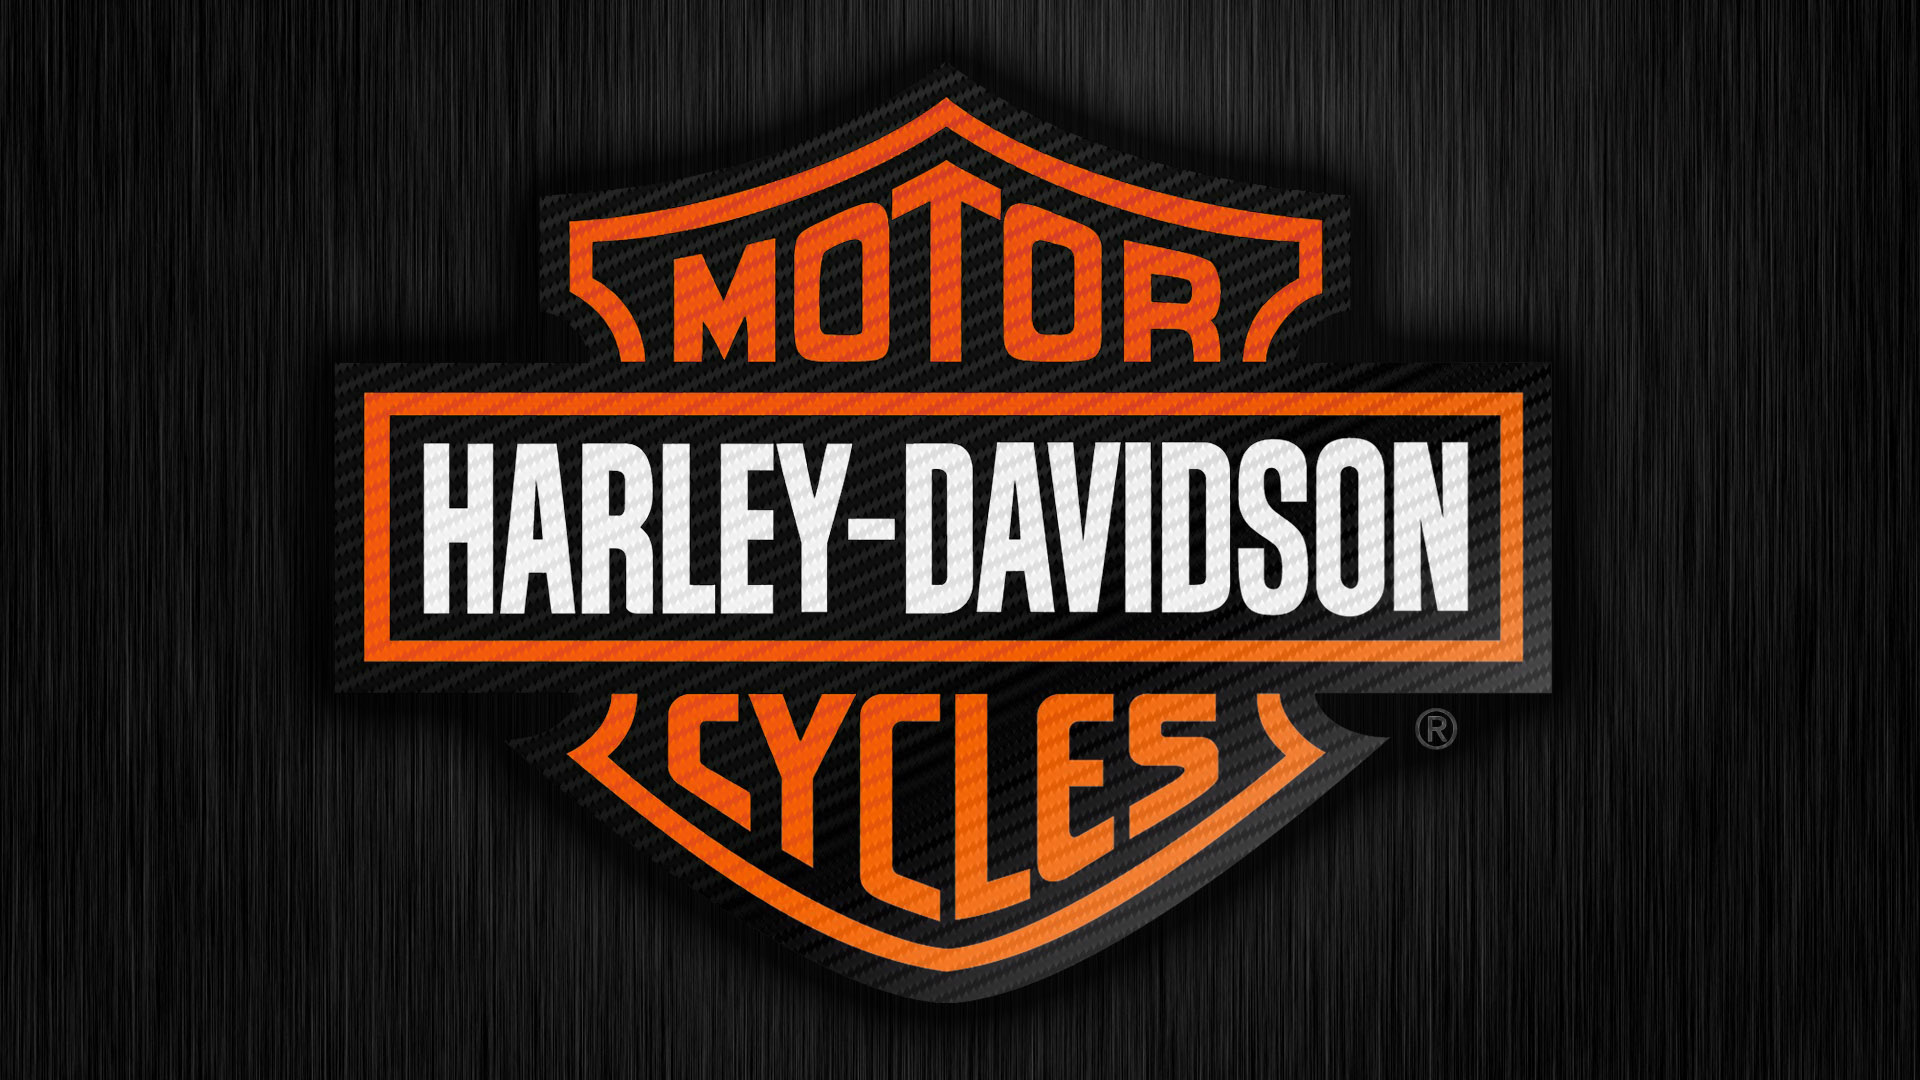 HD desktop wallpaper: Motorcycles, Harley Davidson, Vehicles, Harley  Davidson Logo download free picture #188964